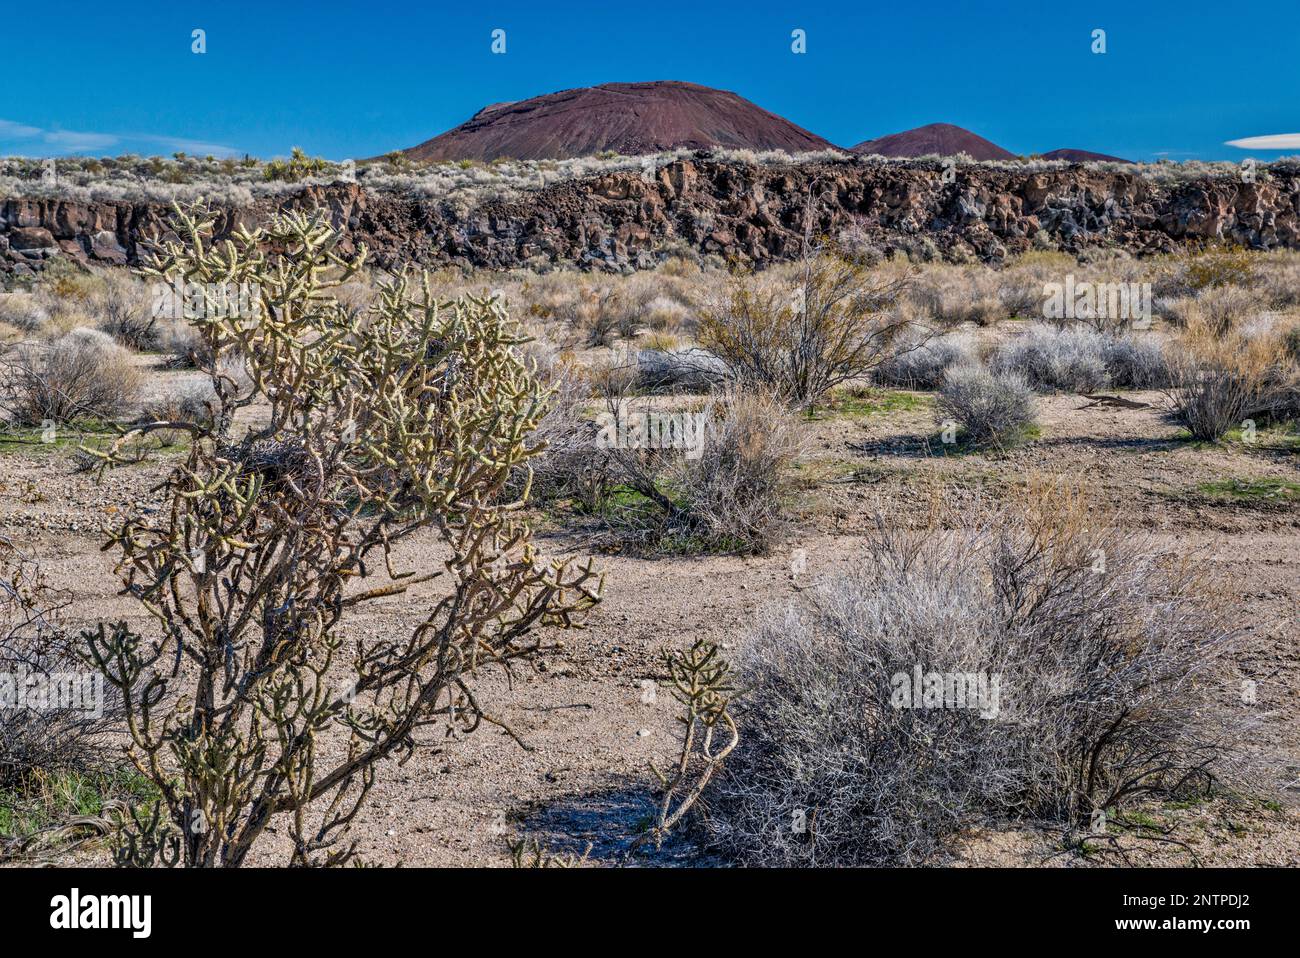 Capa de basalto, cono de ceniza, arbustos de creosota, lápiz cholla, camino de la mina de Aikens, Ceniza Cones Lava Beds, Mojave National Preserve, California, EE.UU Foto de stock